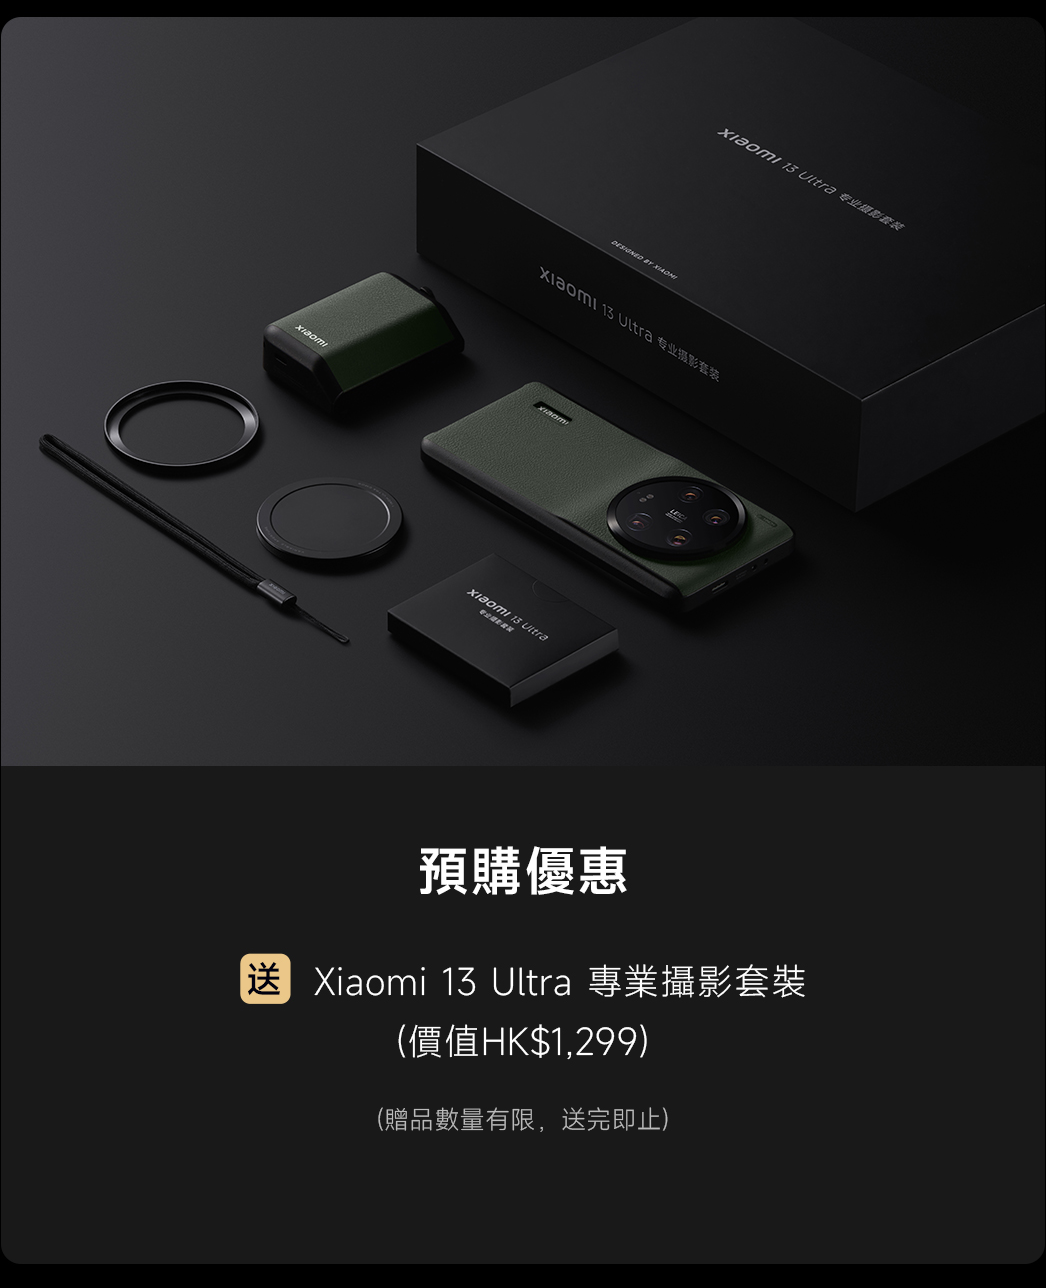 Xiaomi 13 Ultra 首銷活動